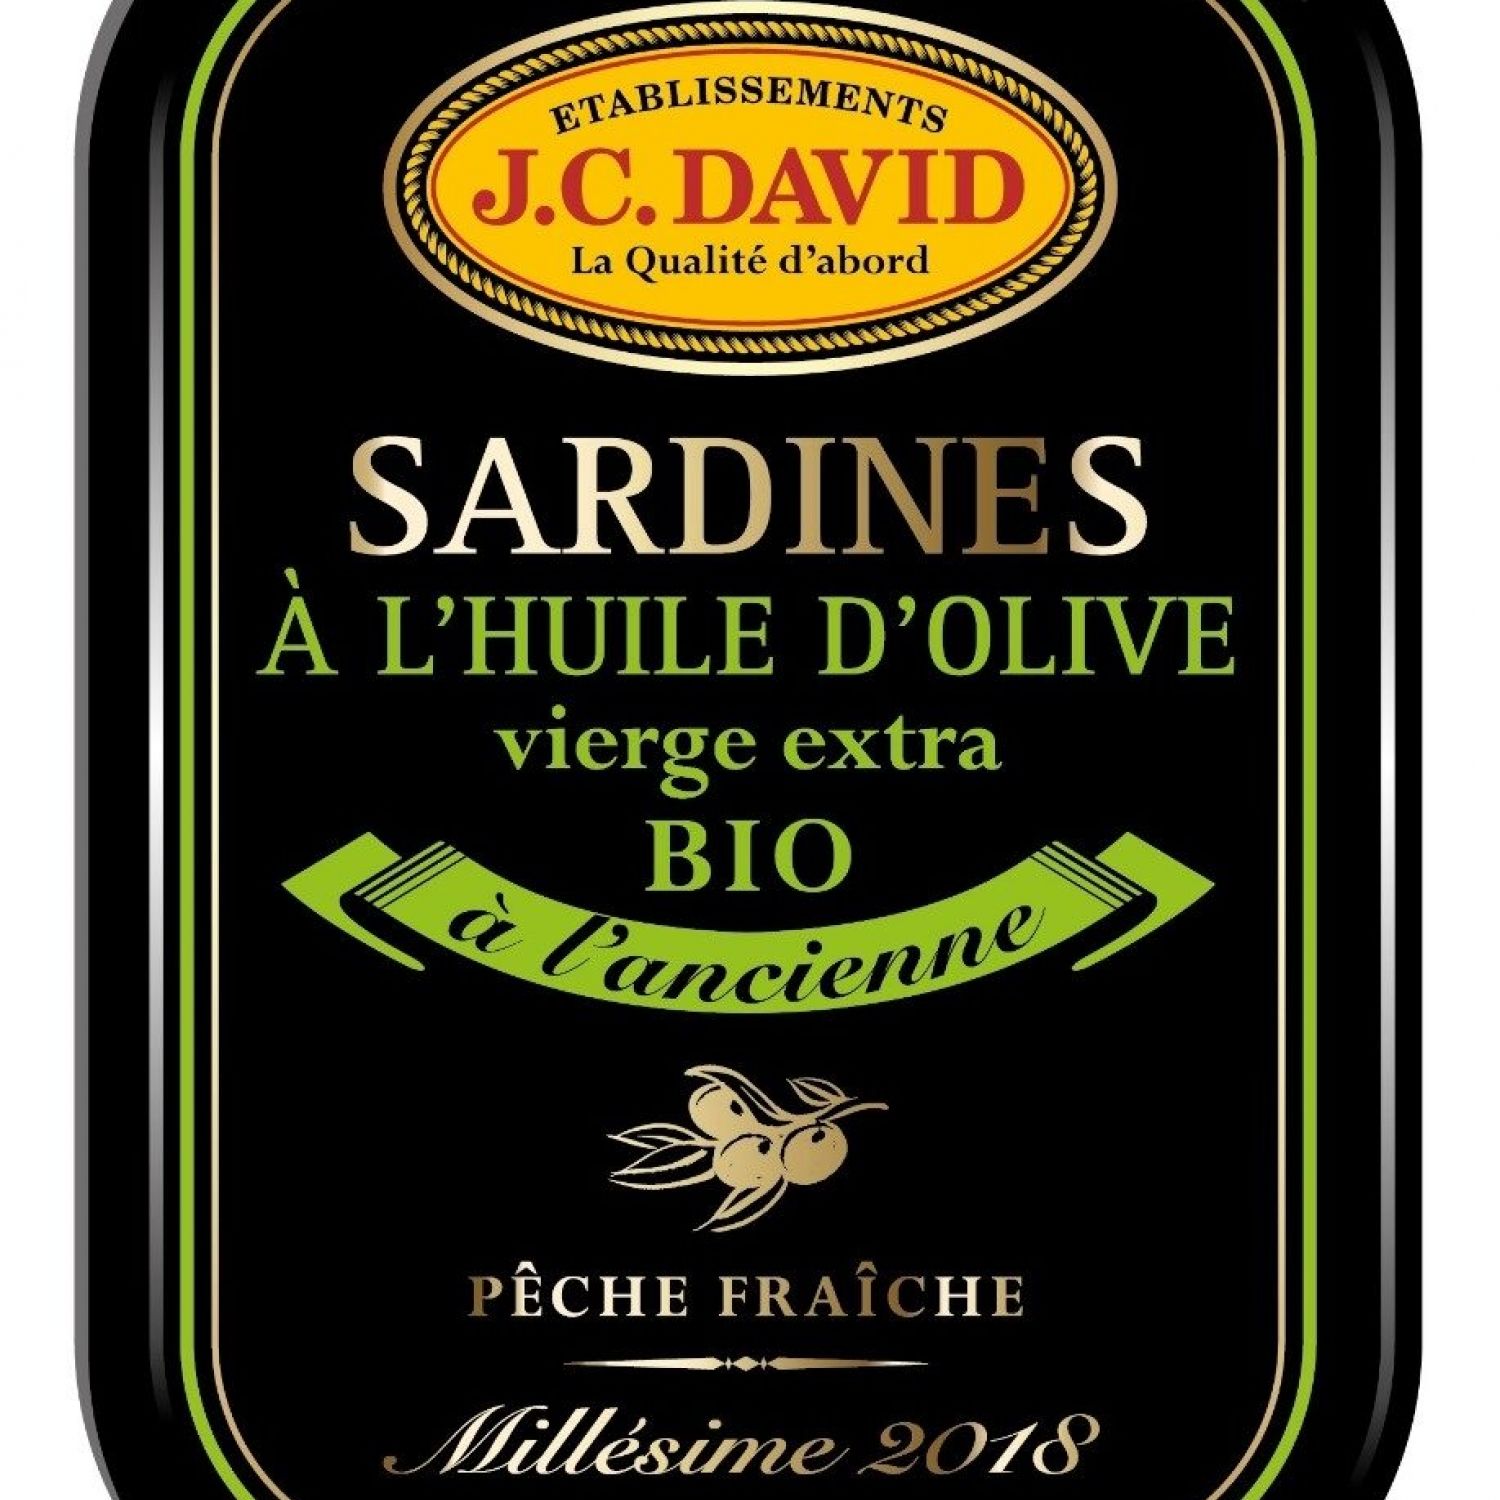 Sardines à l'huile d'olive Bio